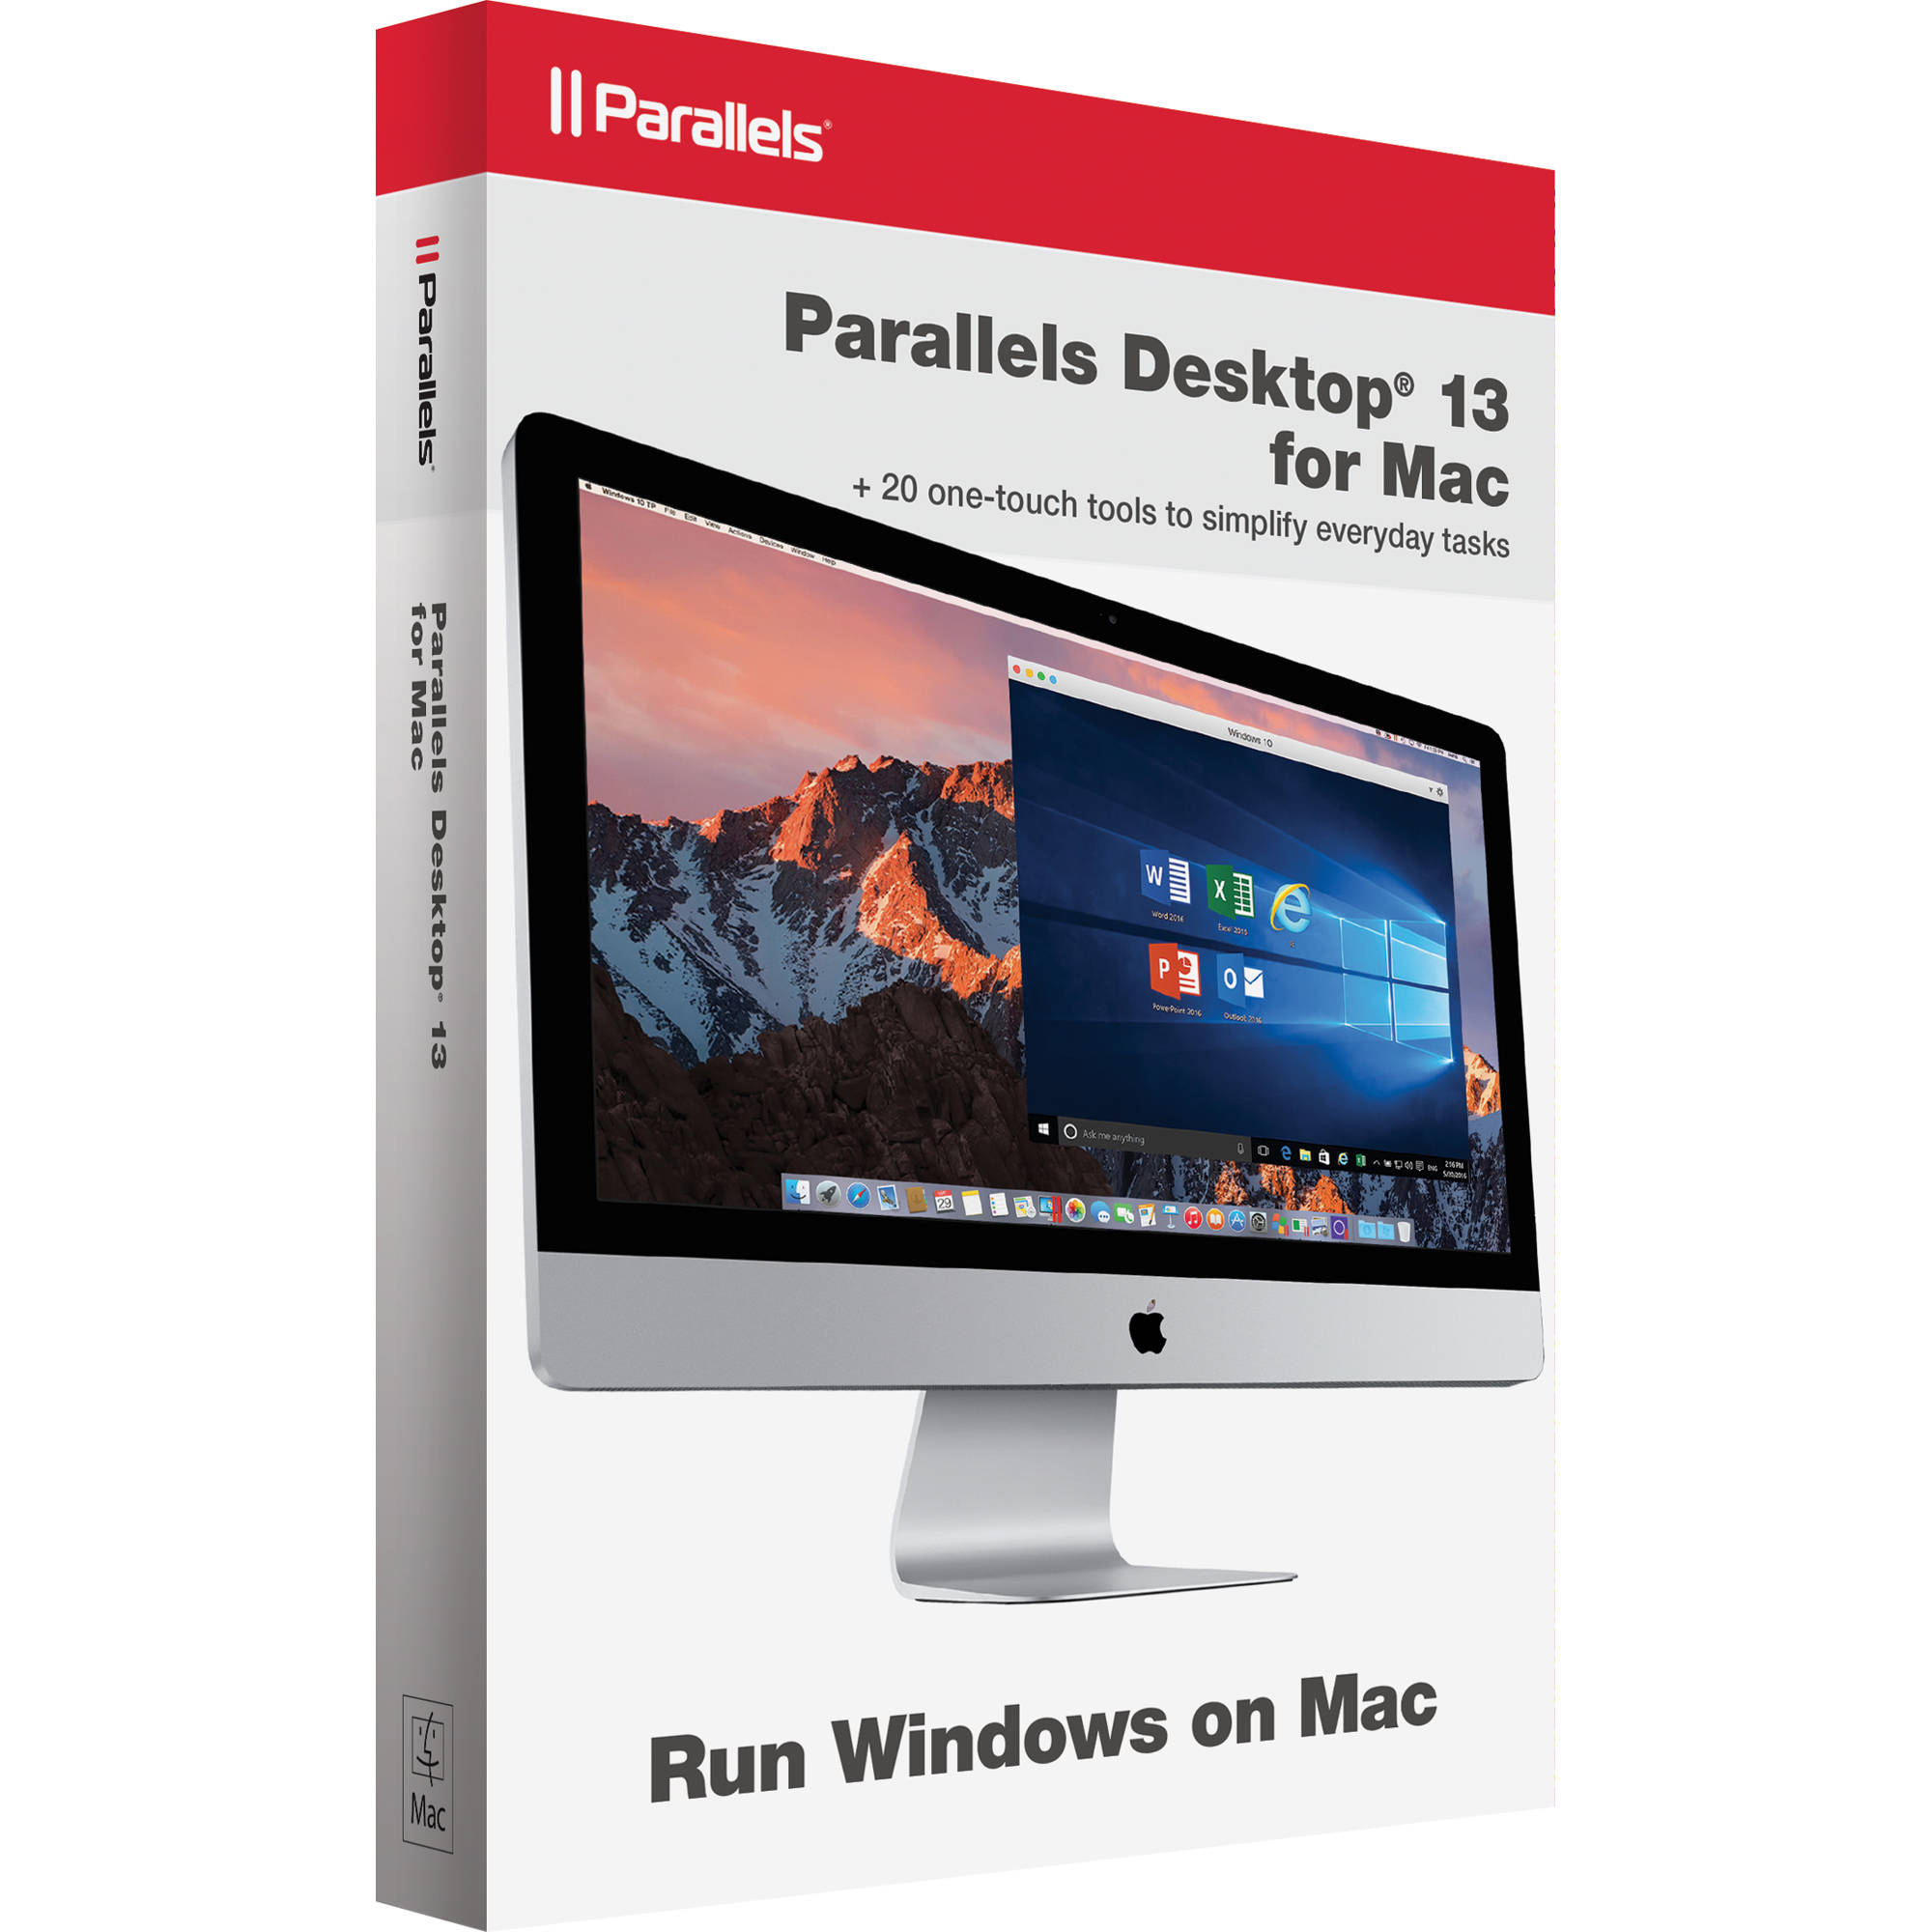 Parallels desktop 5 for mac